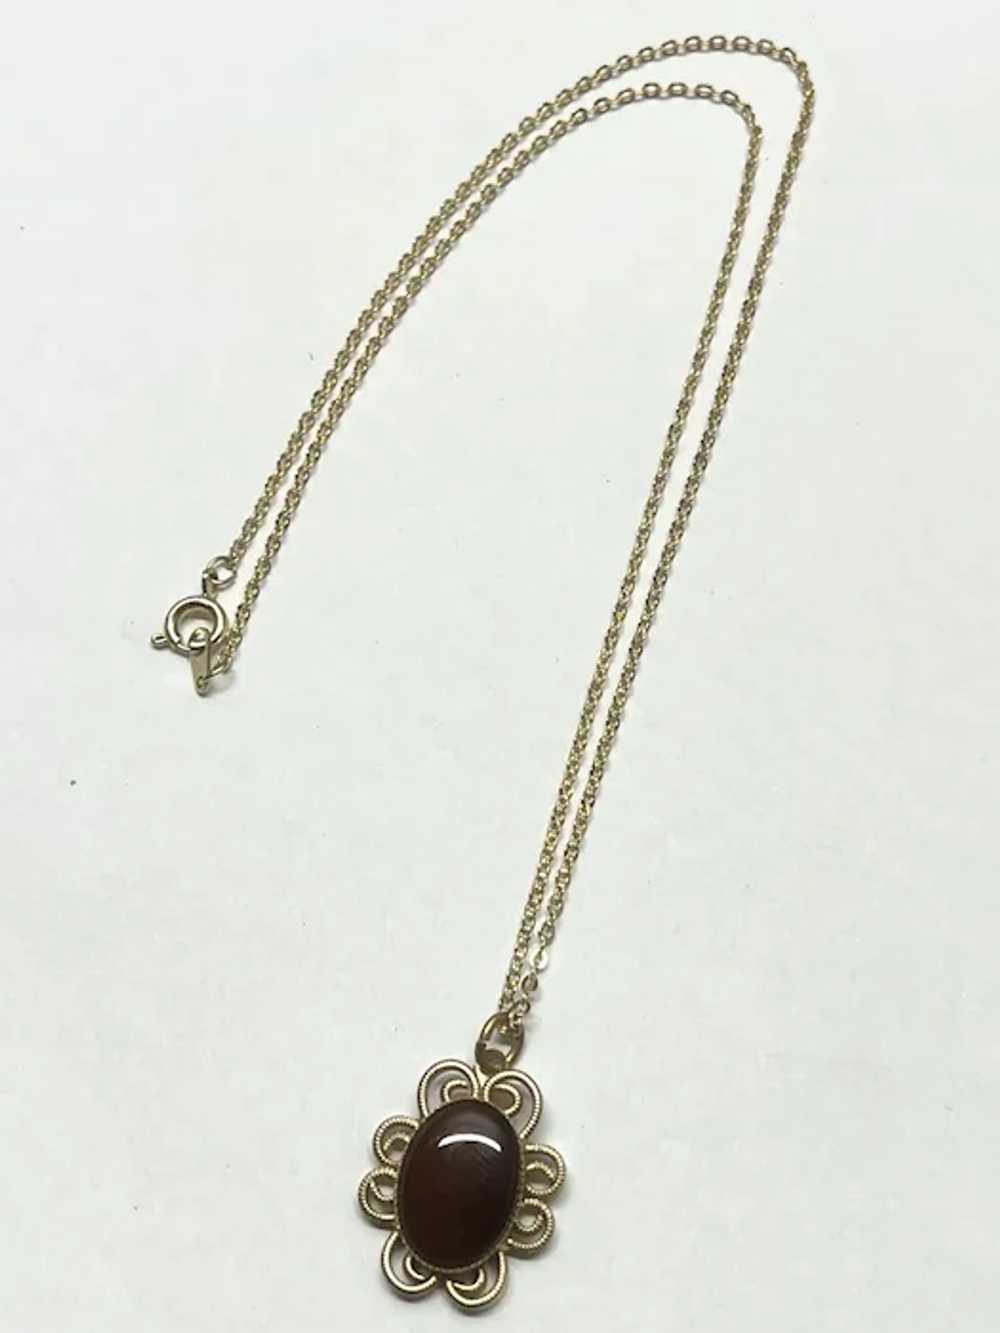 Vintage stone flower pendant charm necklace - image 4